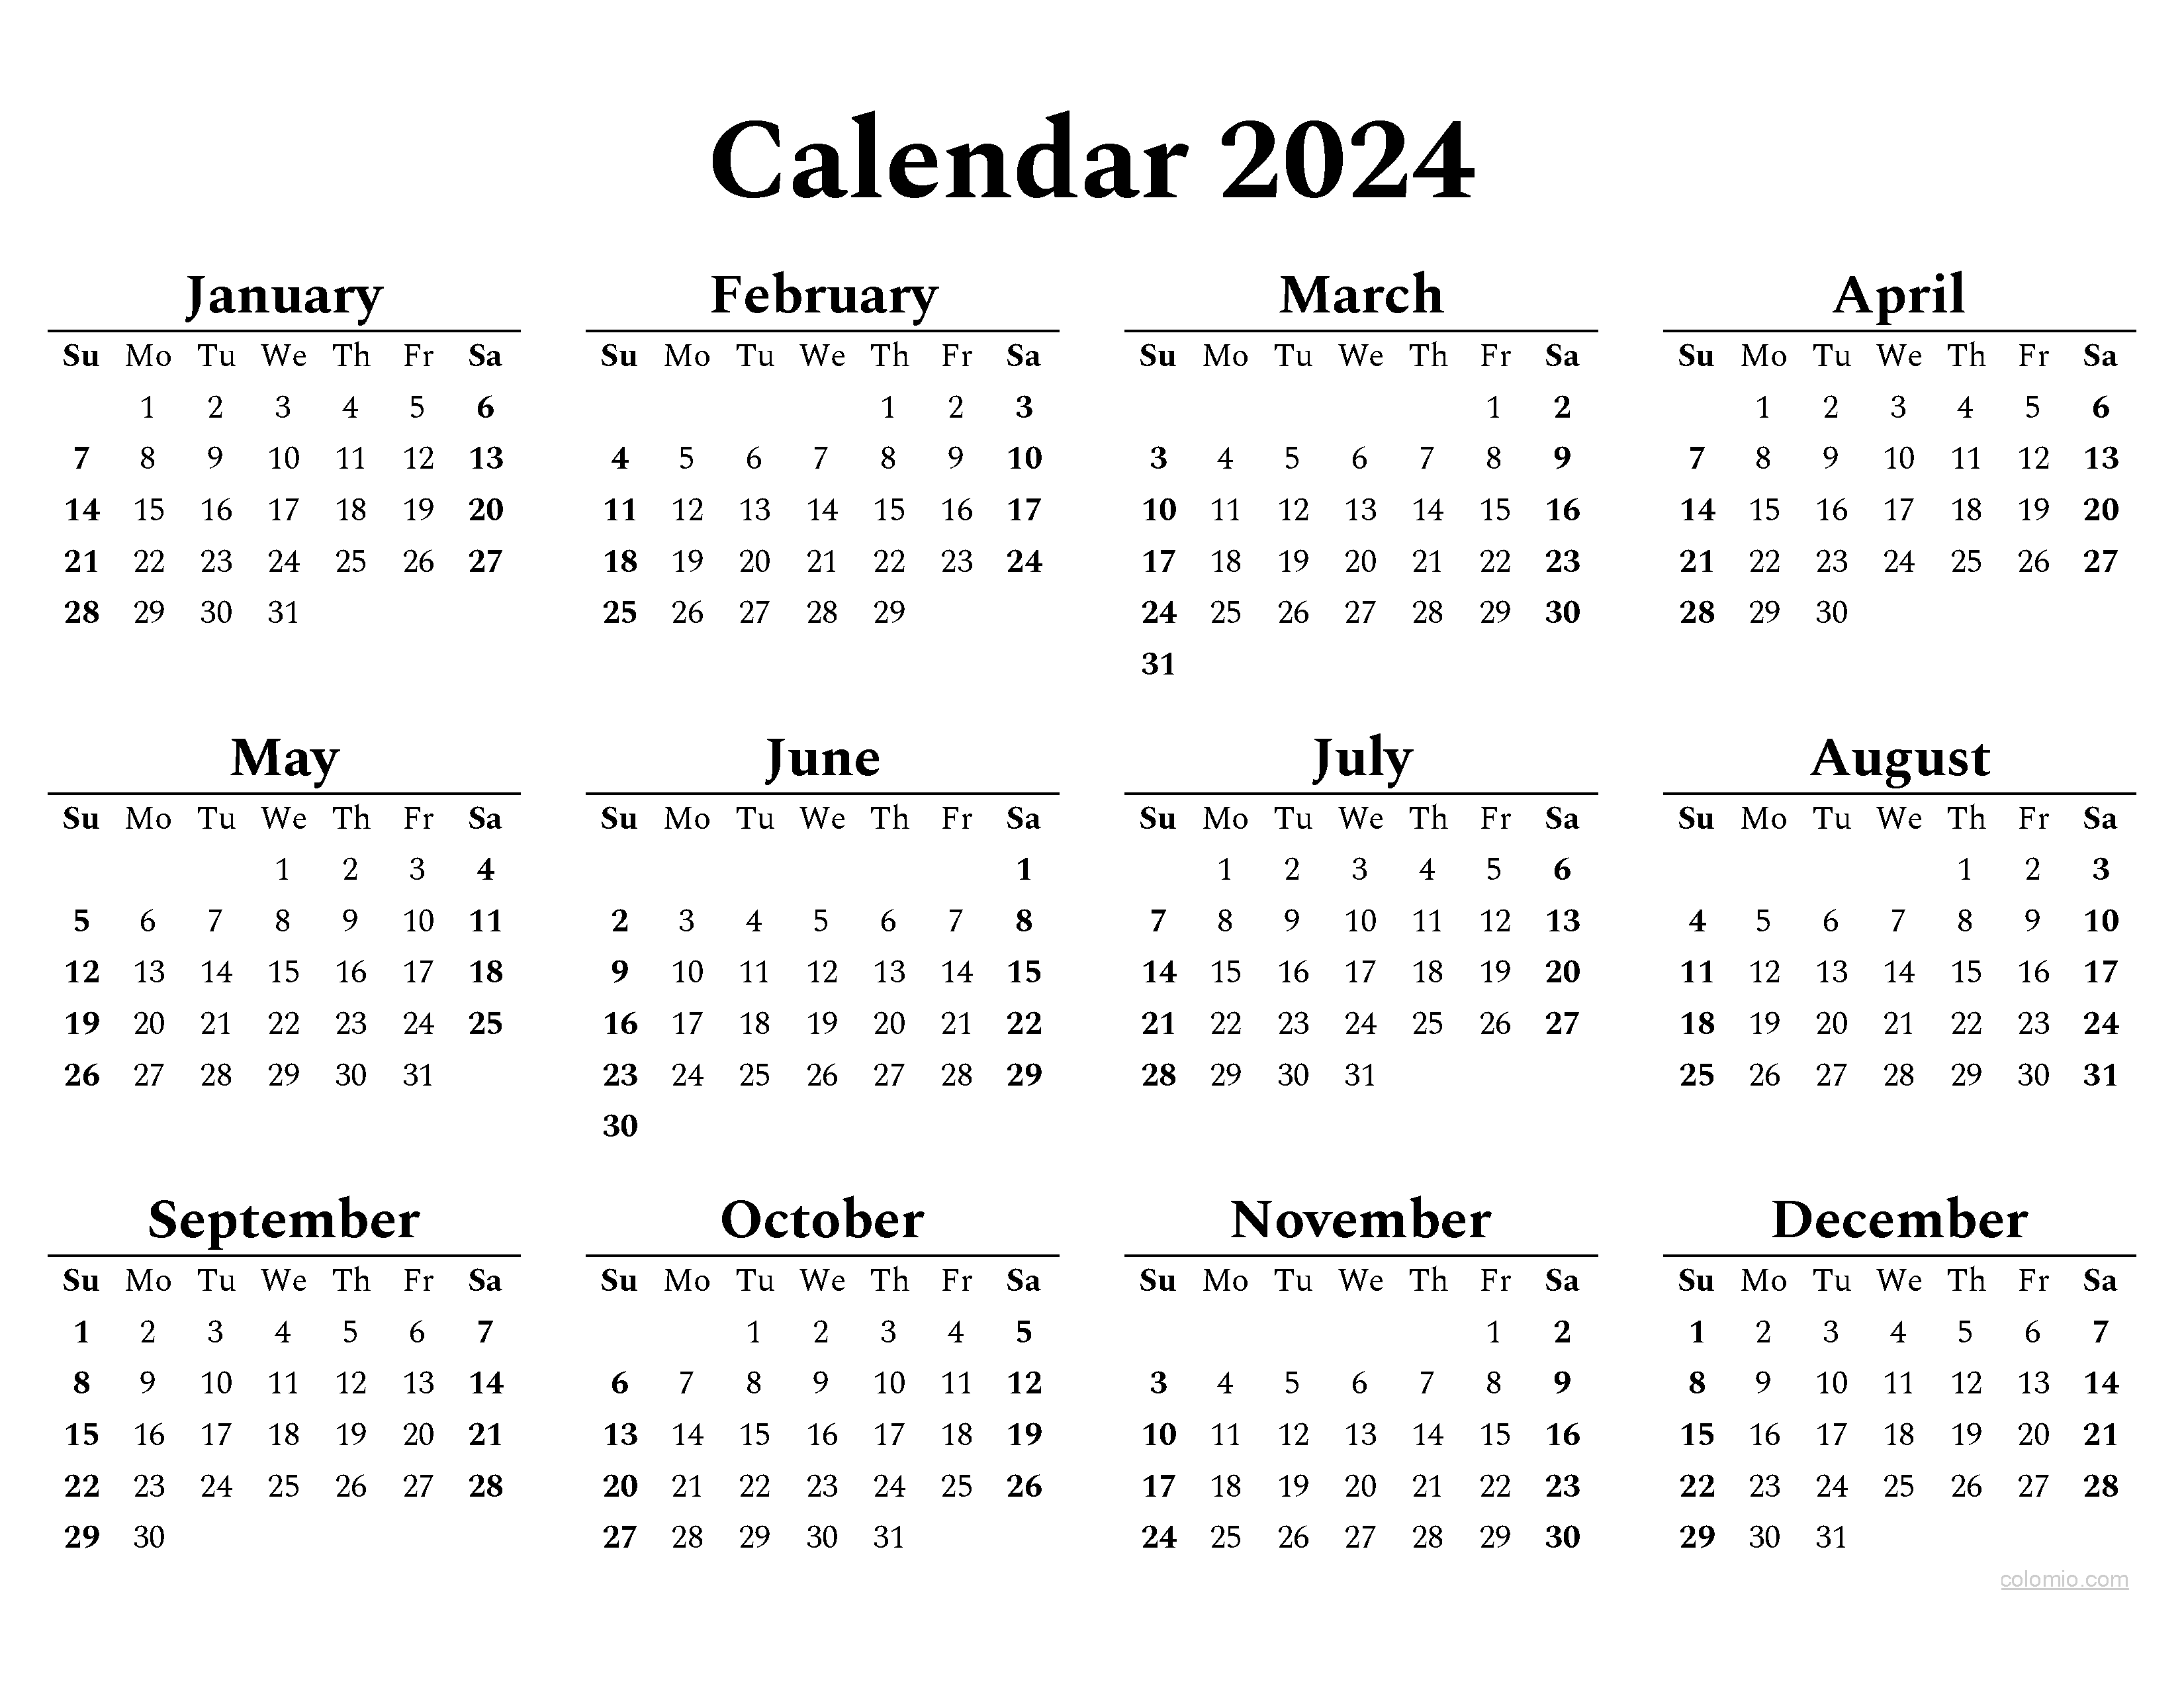 Calendar 2024 Template Pdf Fina Orelle - Free Printable 2024 Calendar From Towncalendars